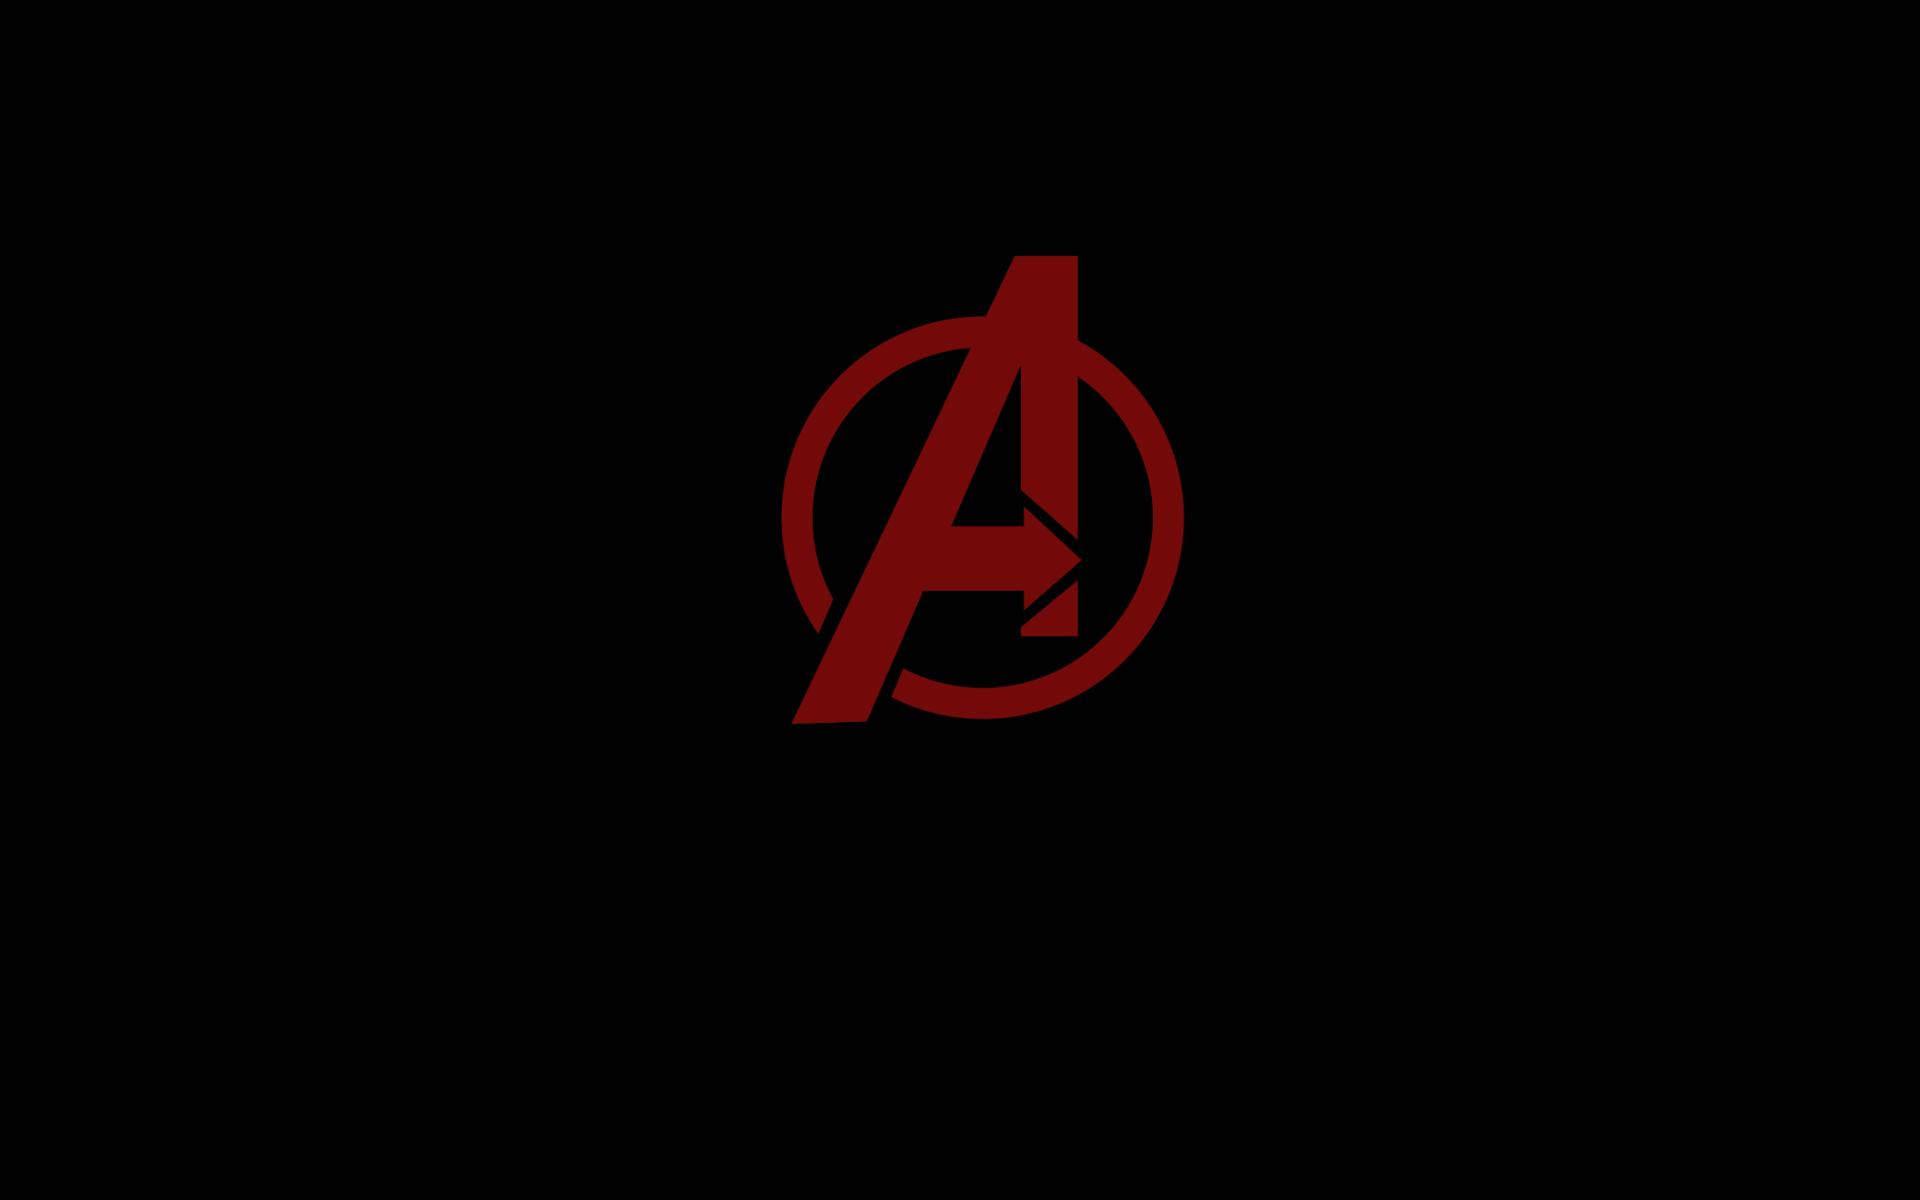 Avengers Logo Wallpapers  Top 22 Best Avengers Logo Wallpapers  HQ 